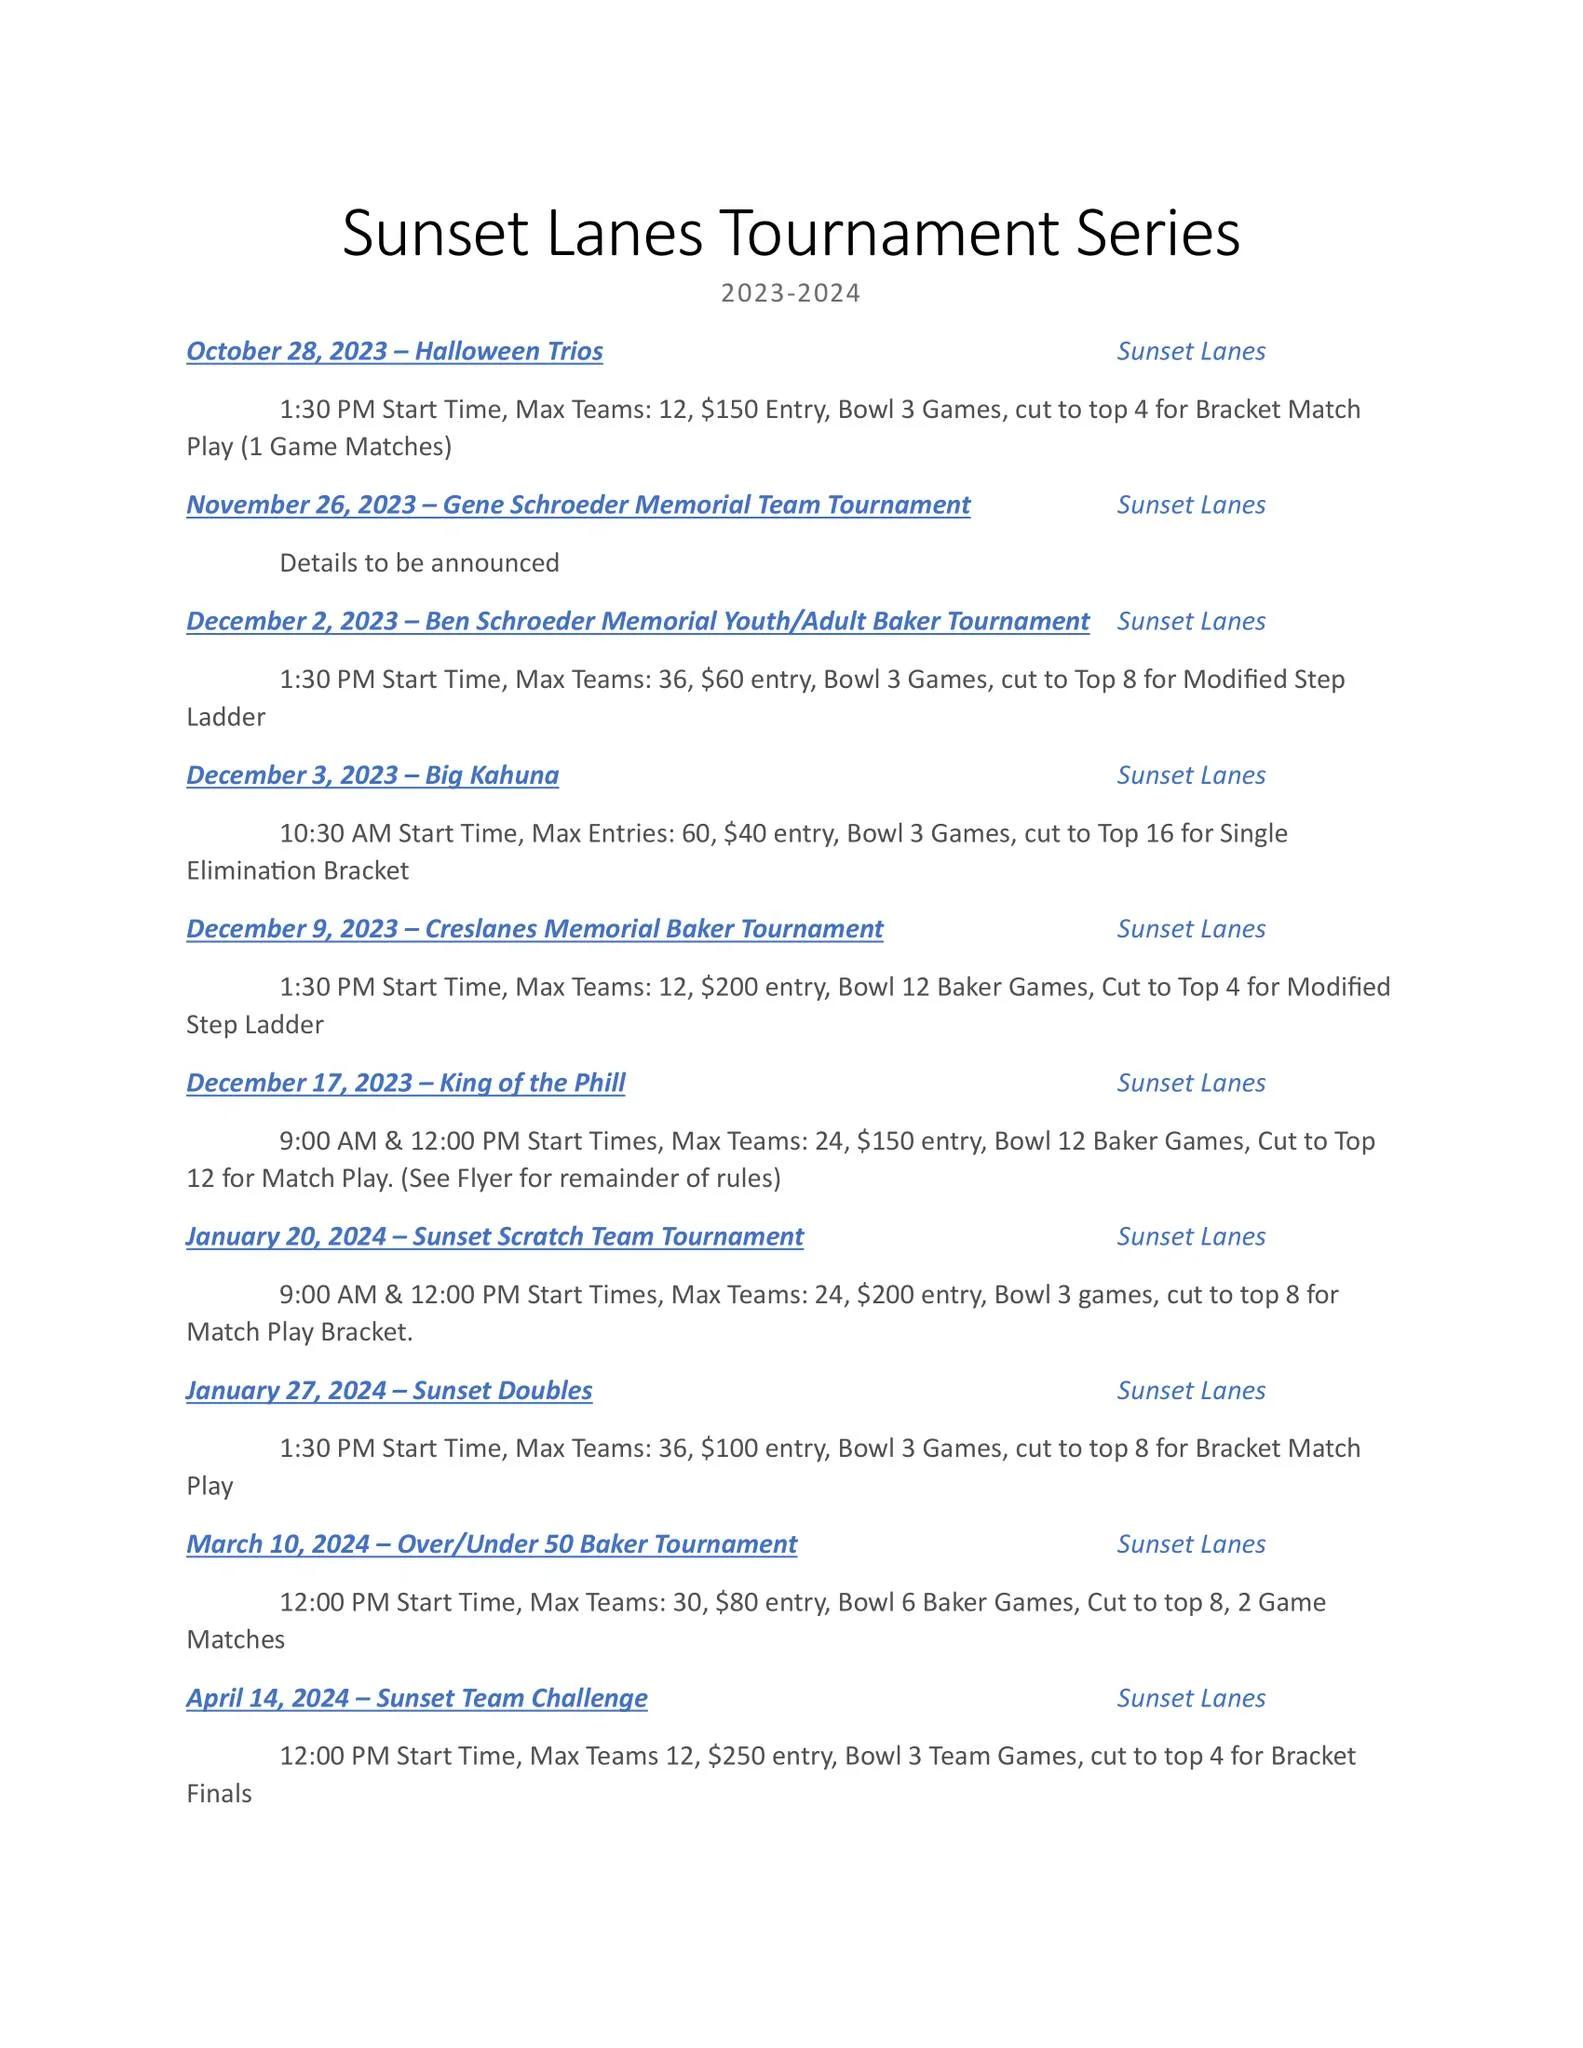 2023-24 Sunset Lanes tournaments